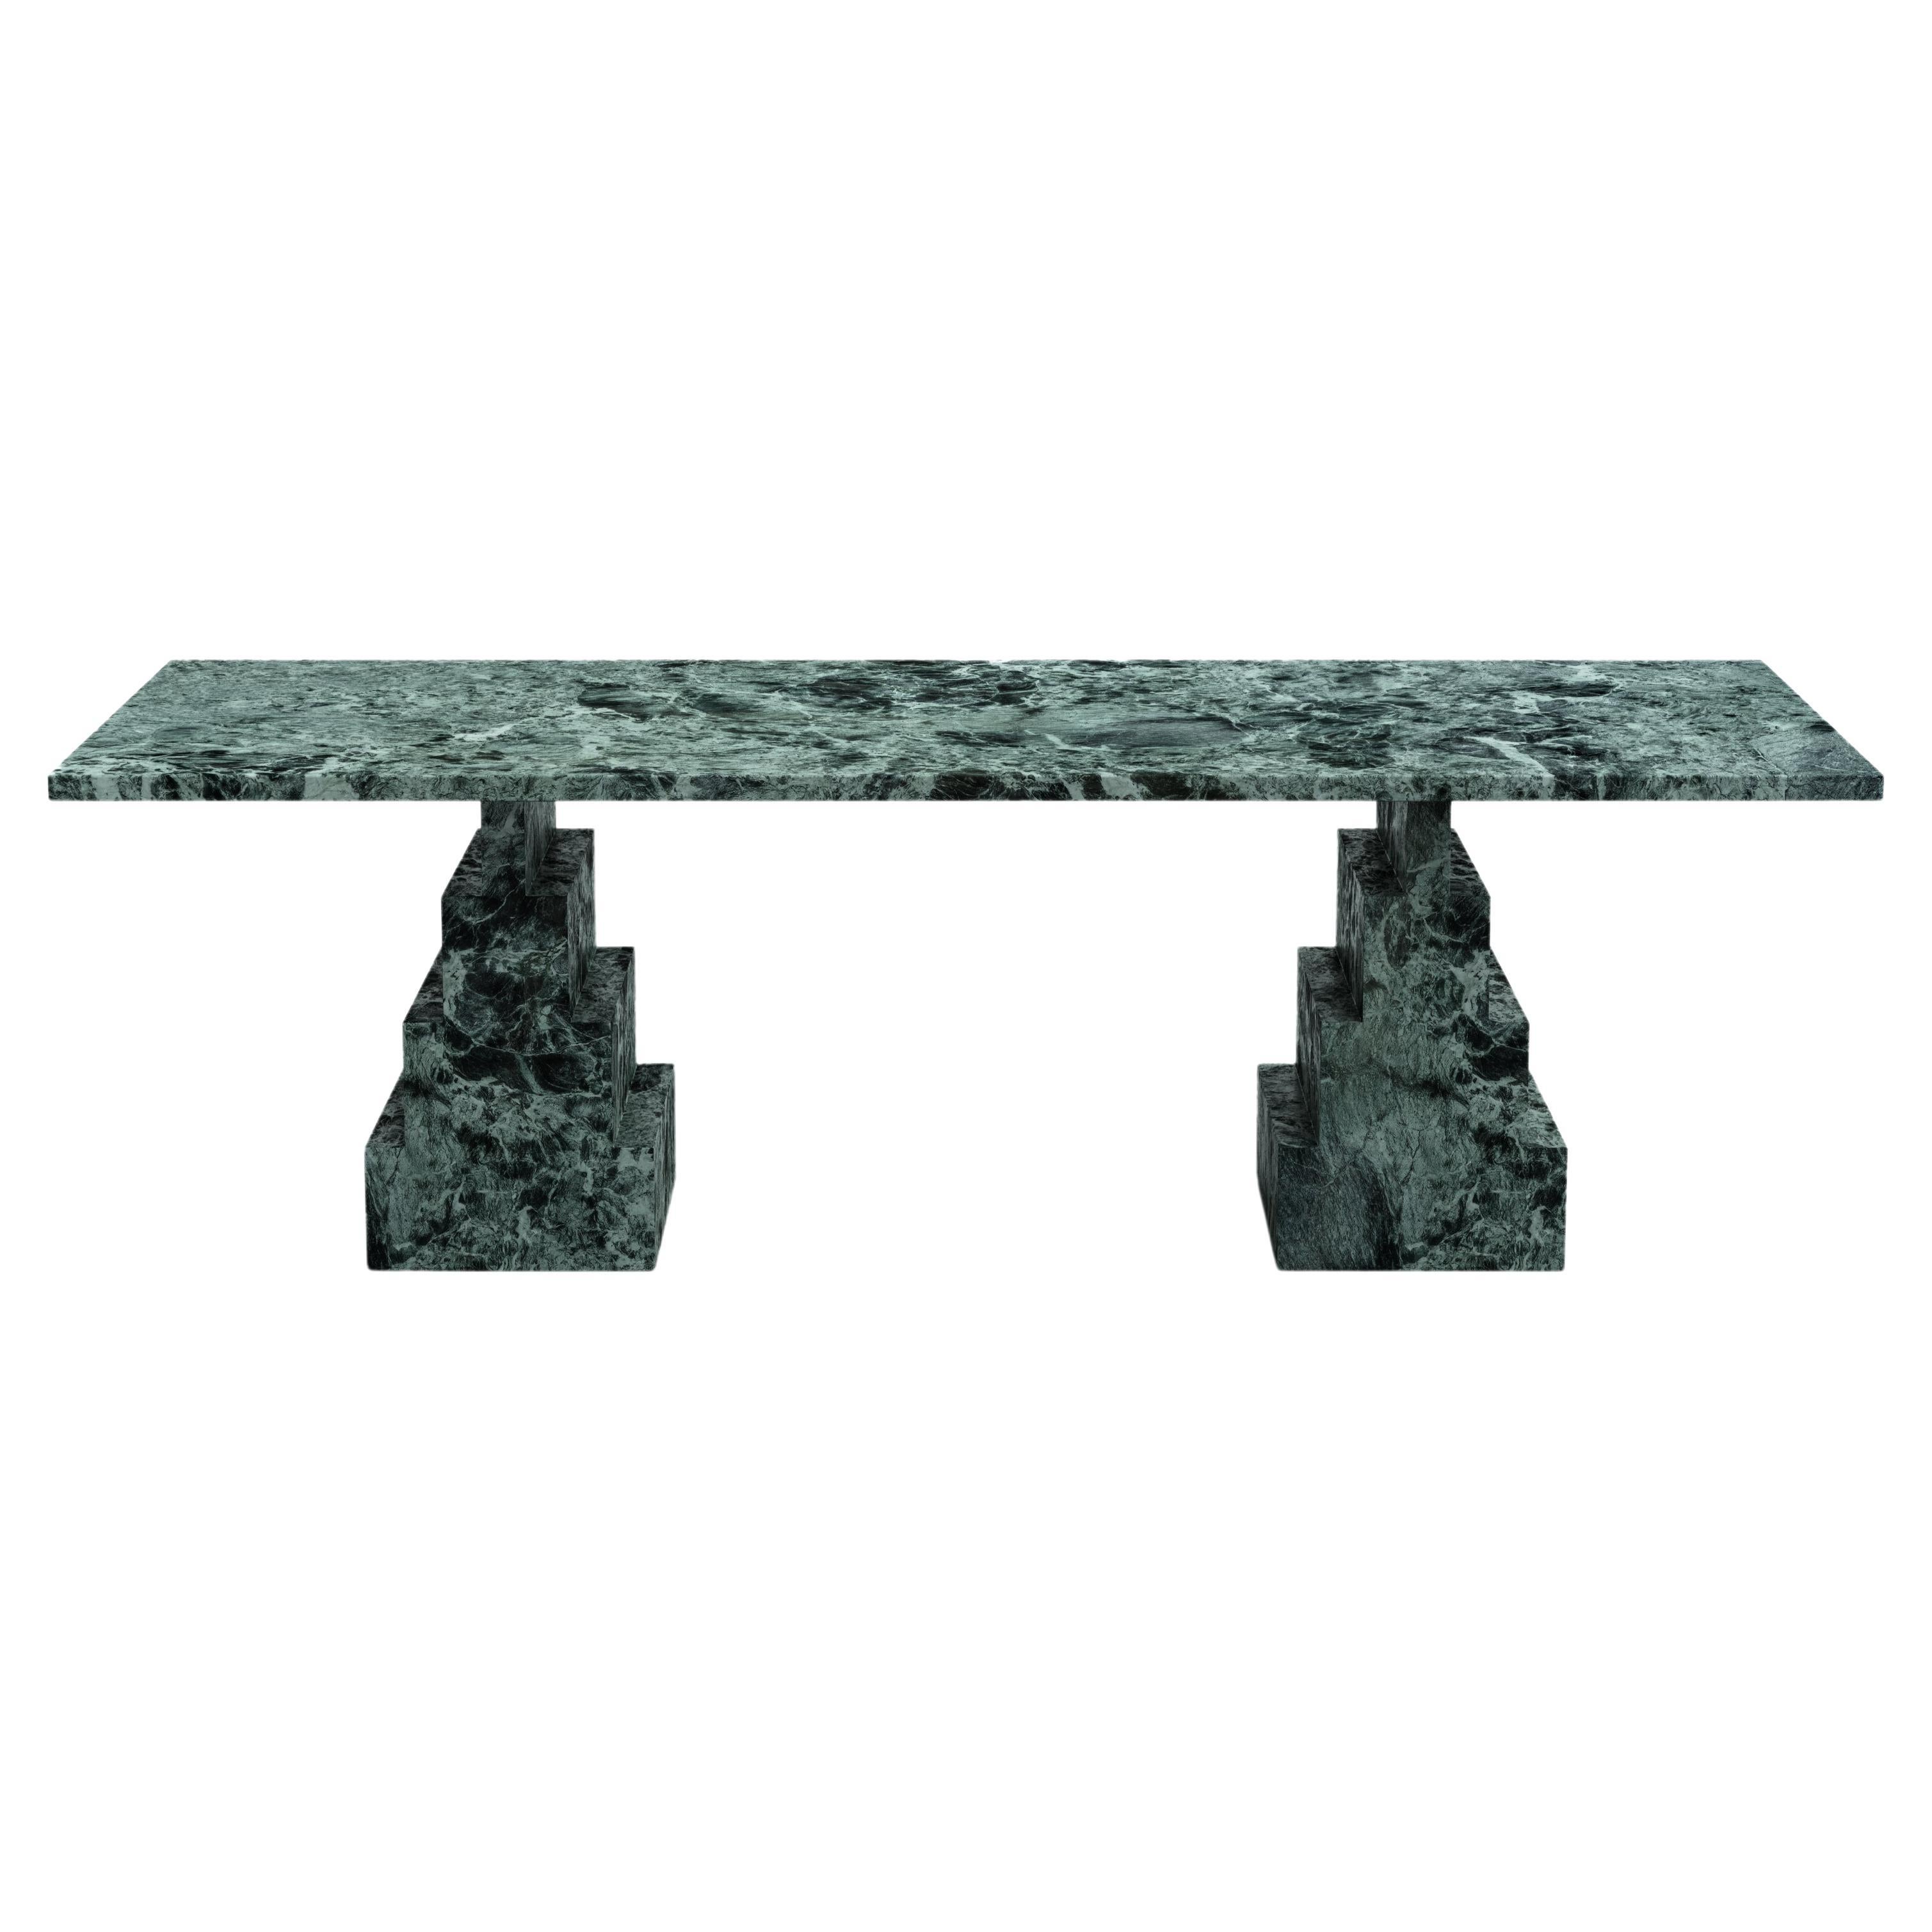 NORDST NIKO Dining Table, Italian Green Marble, Danish Modern Design, New